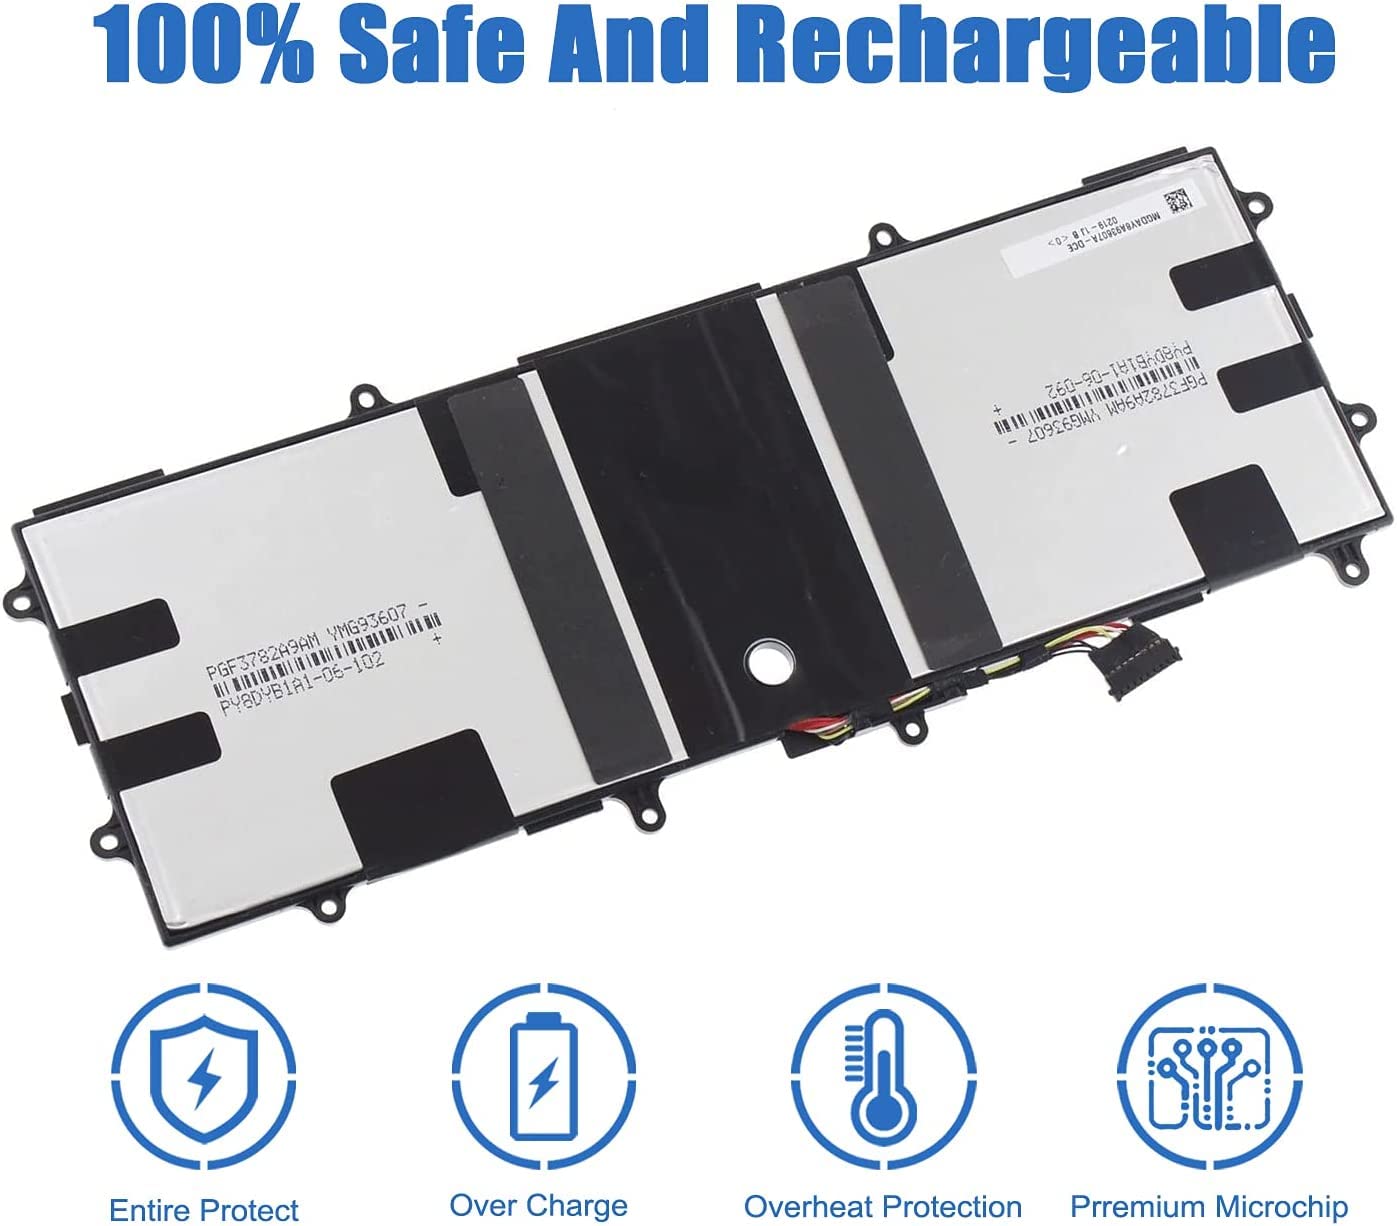 WISTAR AA-PBZN2TP Battery for Samsung Chromebook 303C XE303C12 Chromebook XE303C, XE500T, XE500C, XE503C Xe303c12 Xe303c12-a01us 905s3g 910s3g 915s3g Ba43-00355a Laptop